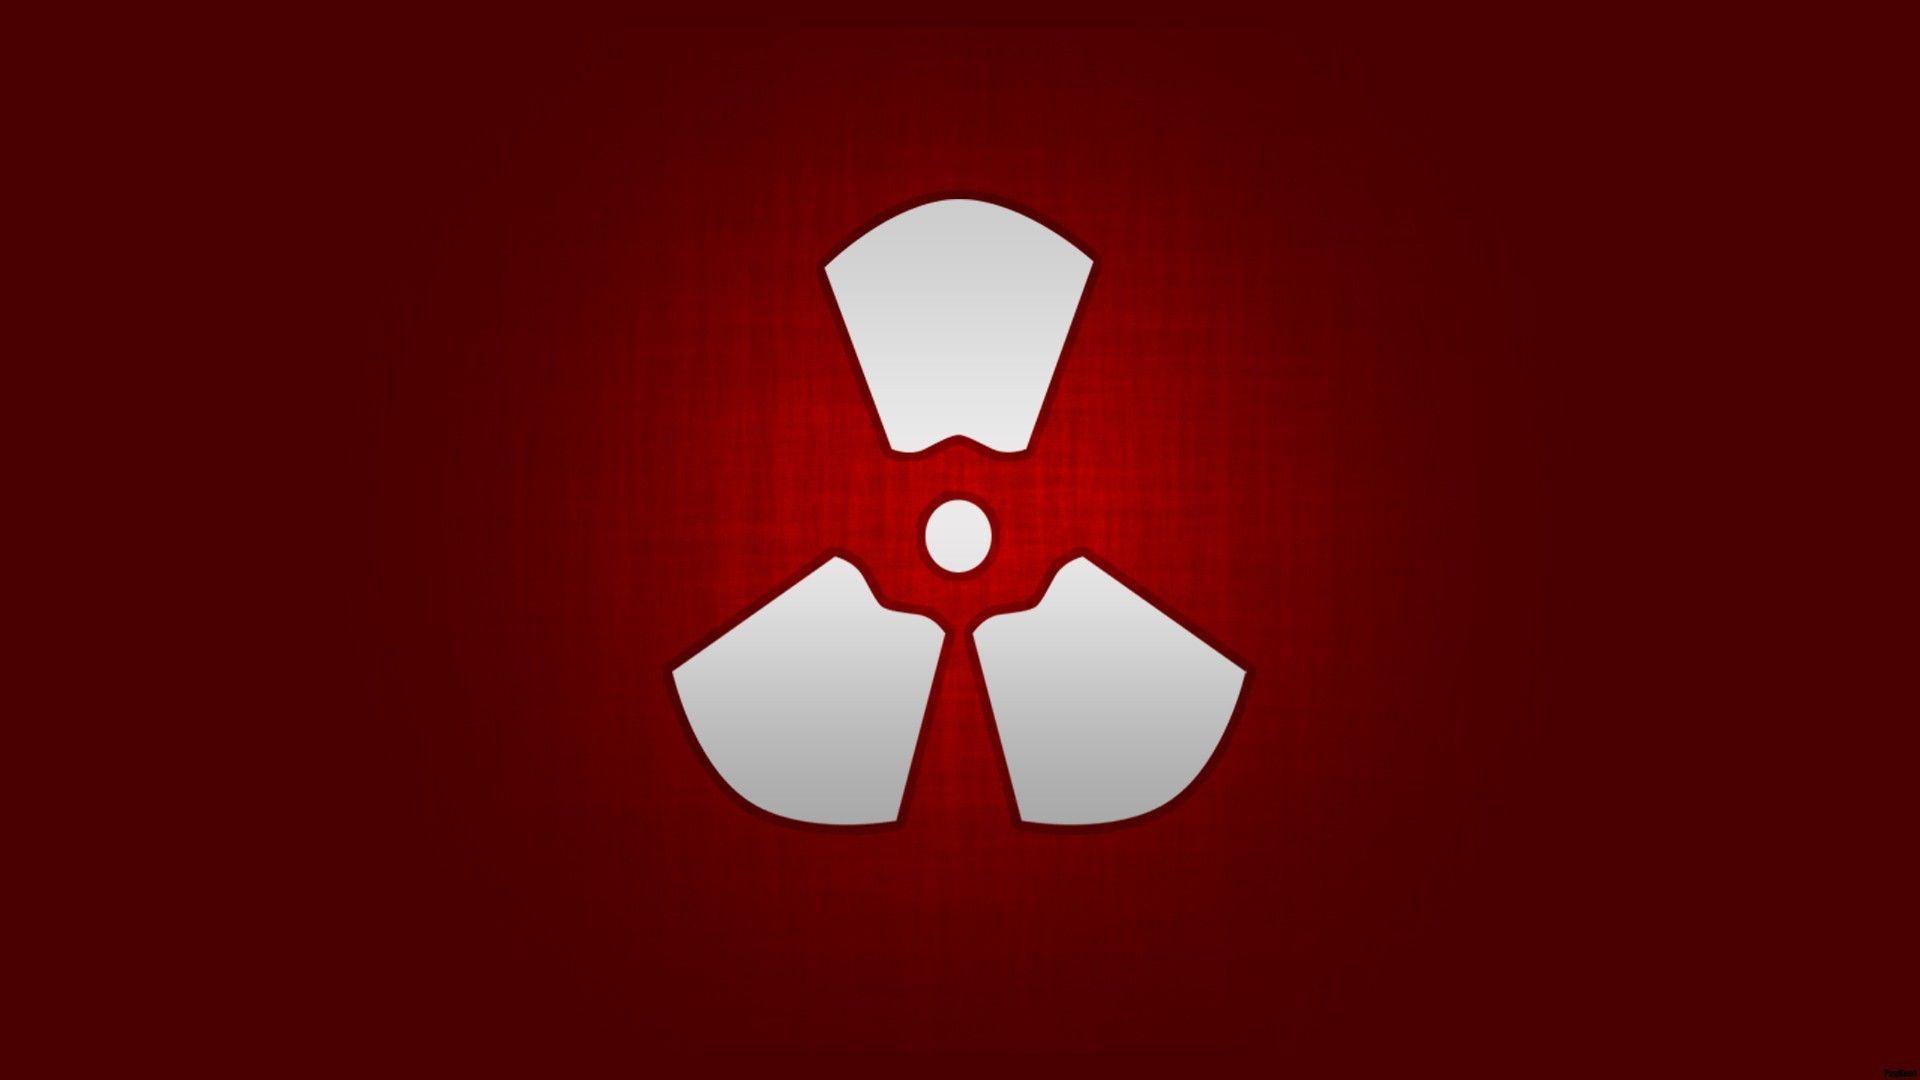 Simply: Atomic caution hazard nuclear desktop bakcgrounds